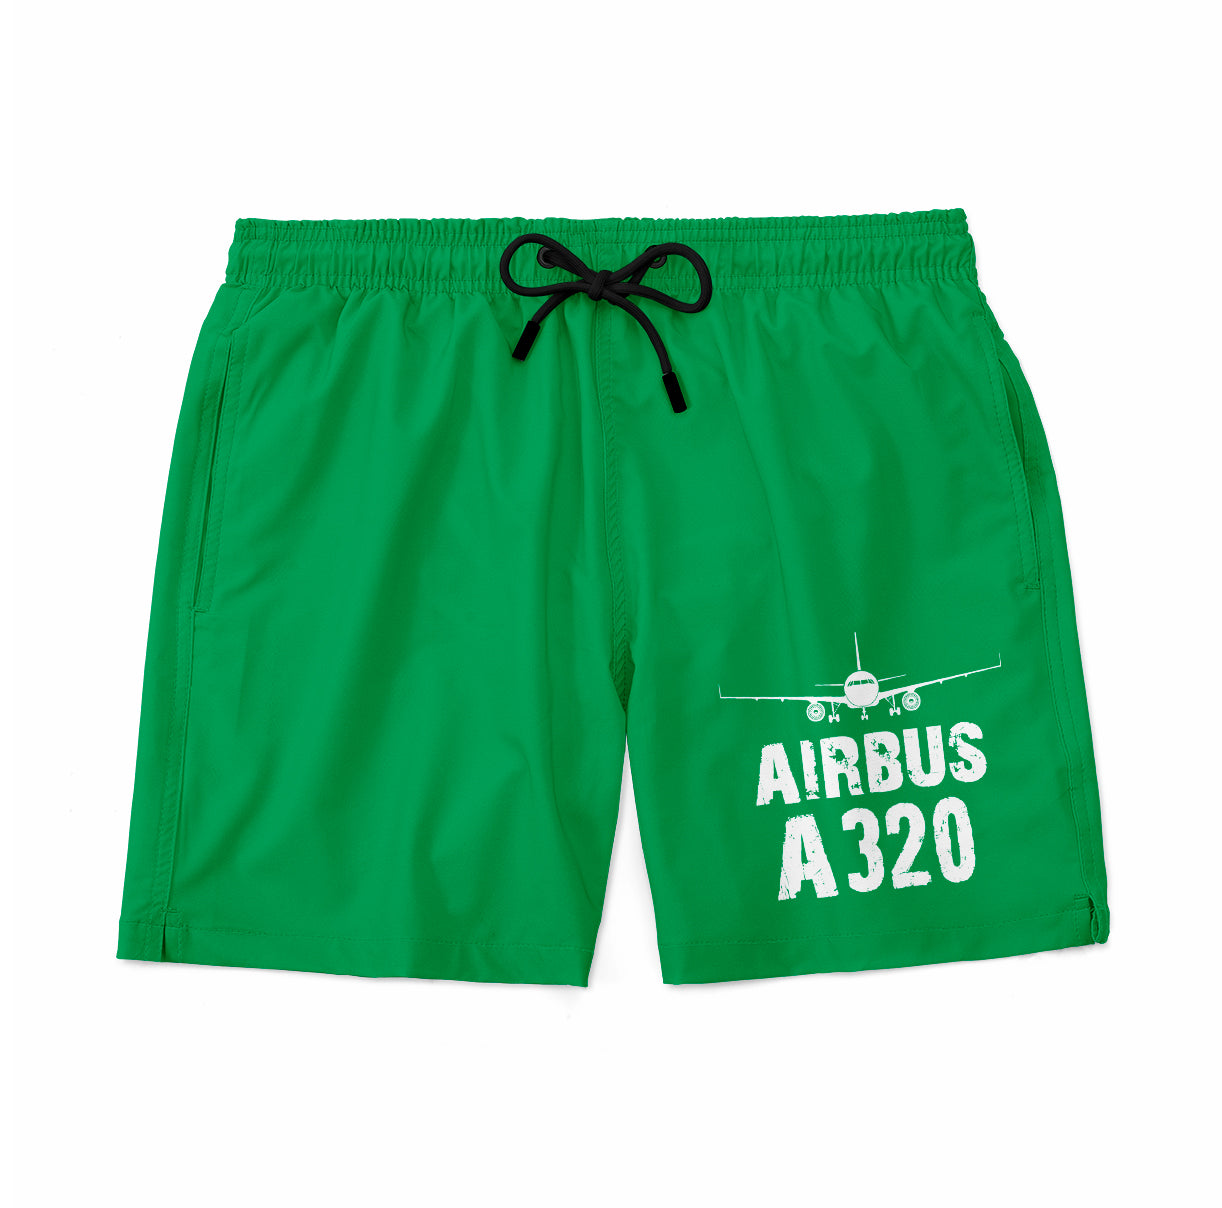 Airbus A320 & Plane Designed Swim Trunks & Shorts